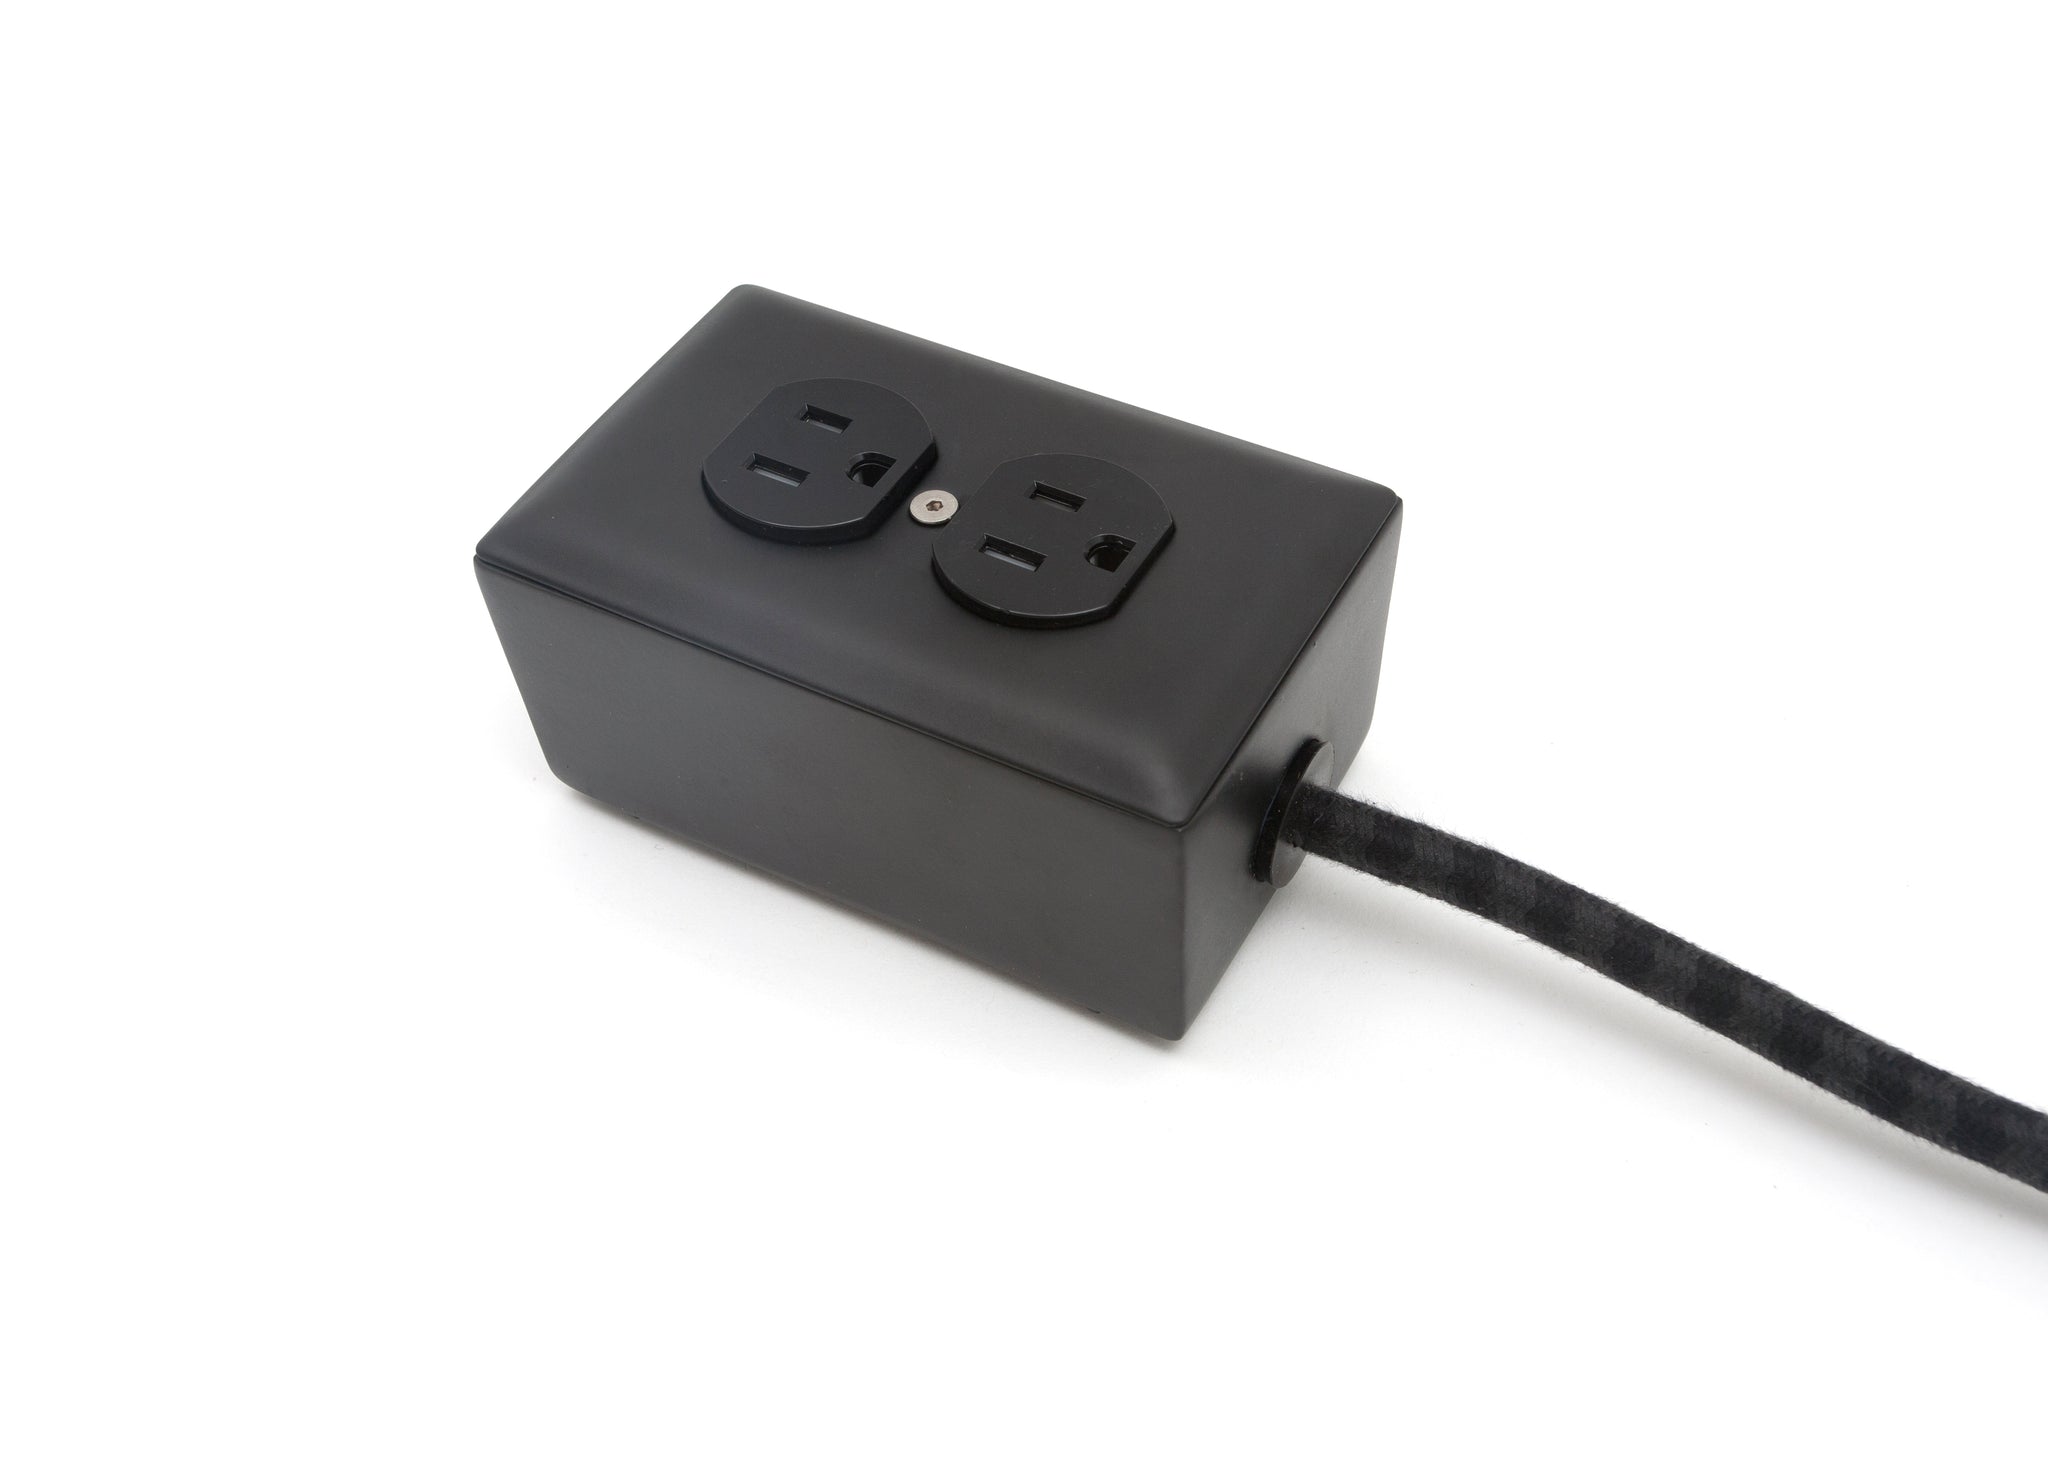 Extō Carrara (Matte) Black - A Modern Dual-Tamper-Resistant Outlet, 15-AMP Extension Cord